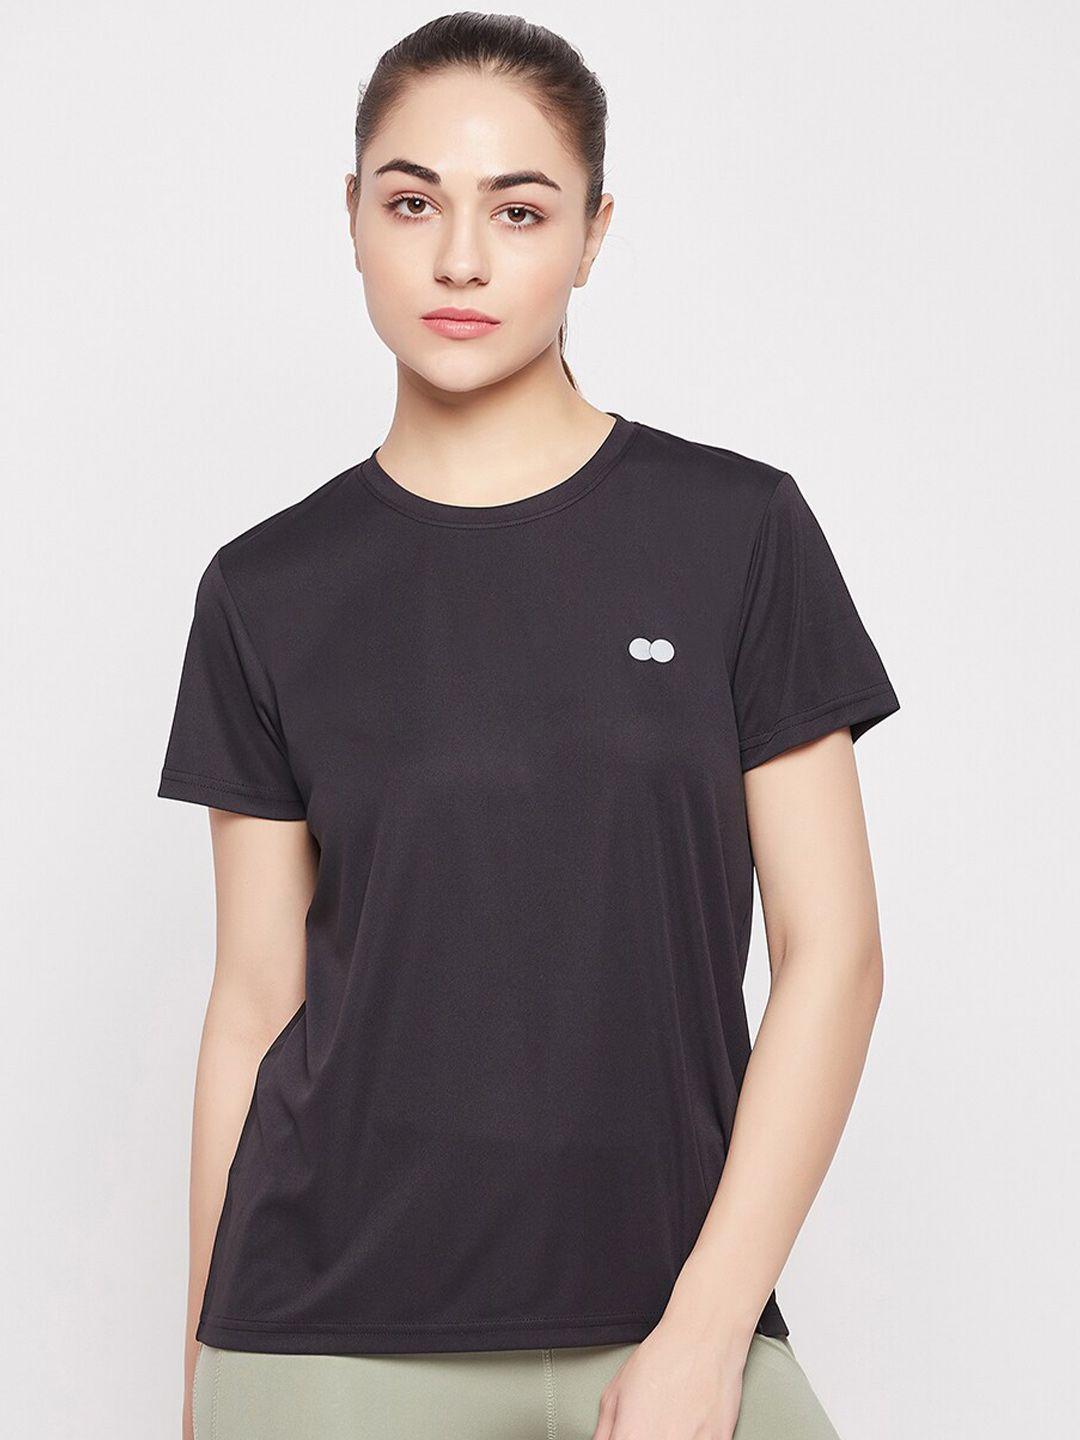 clovia black round neck comfort fit t-shirt